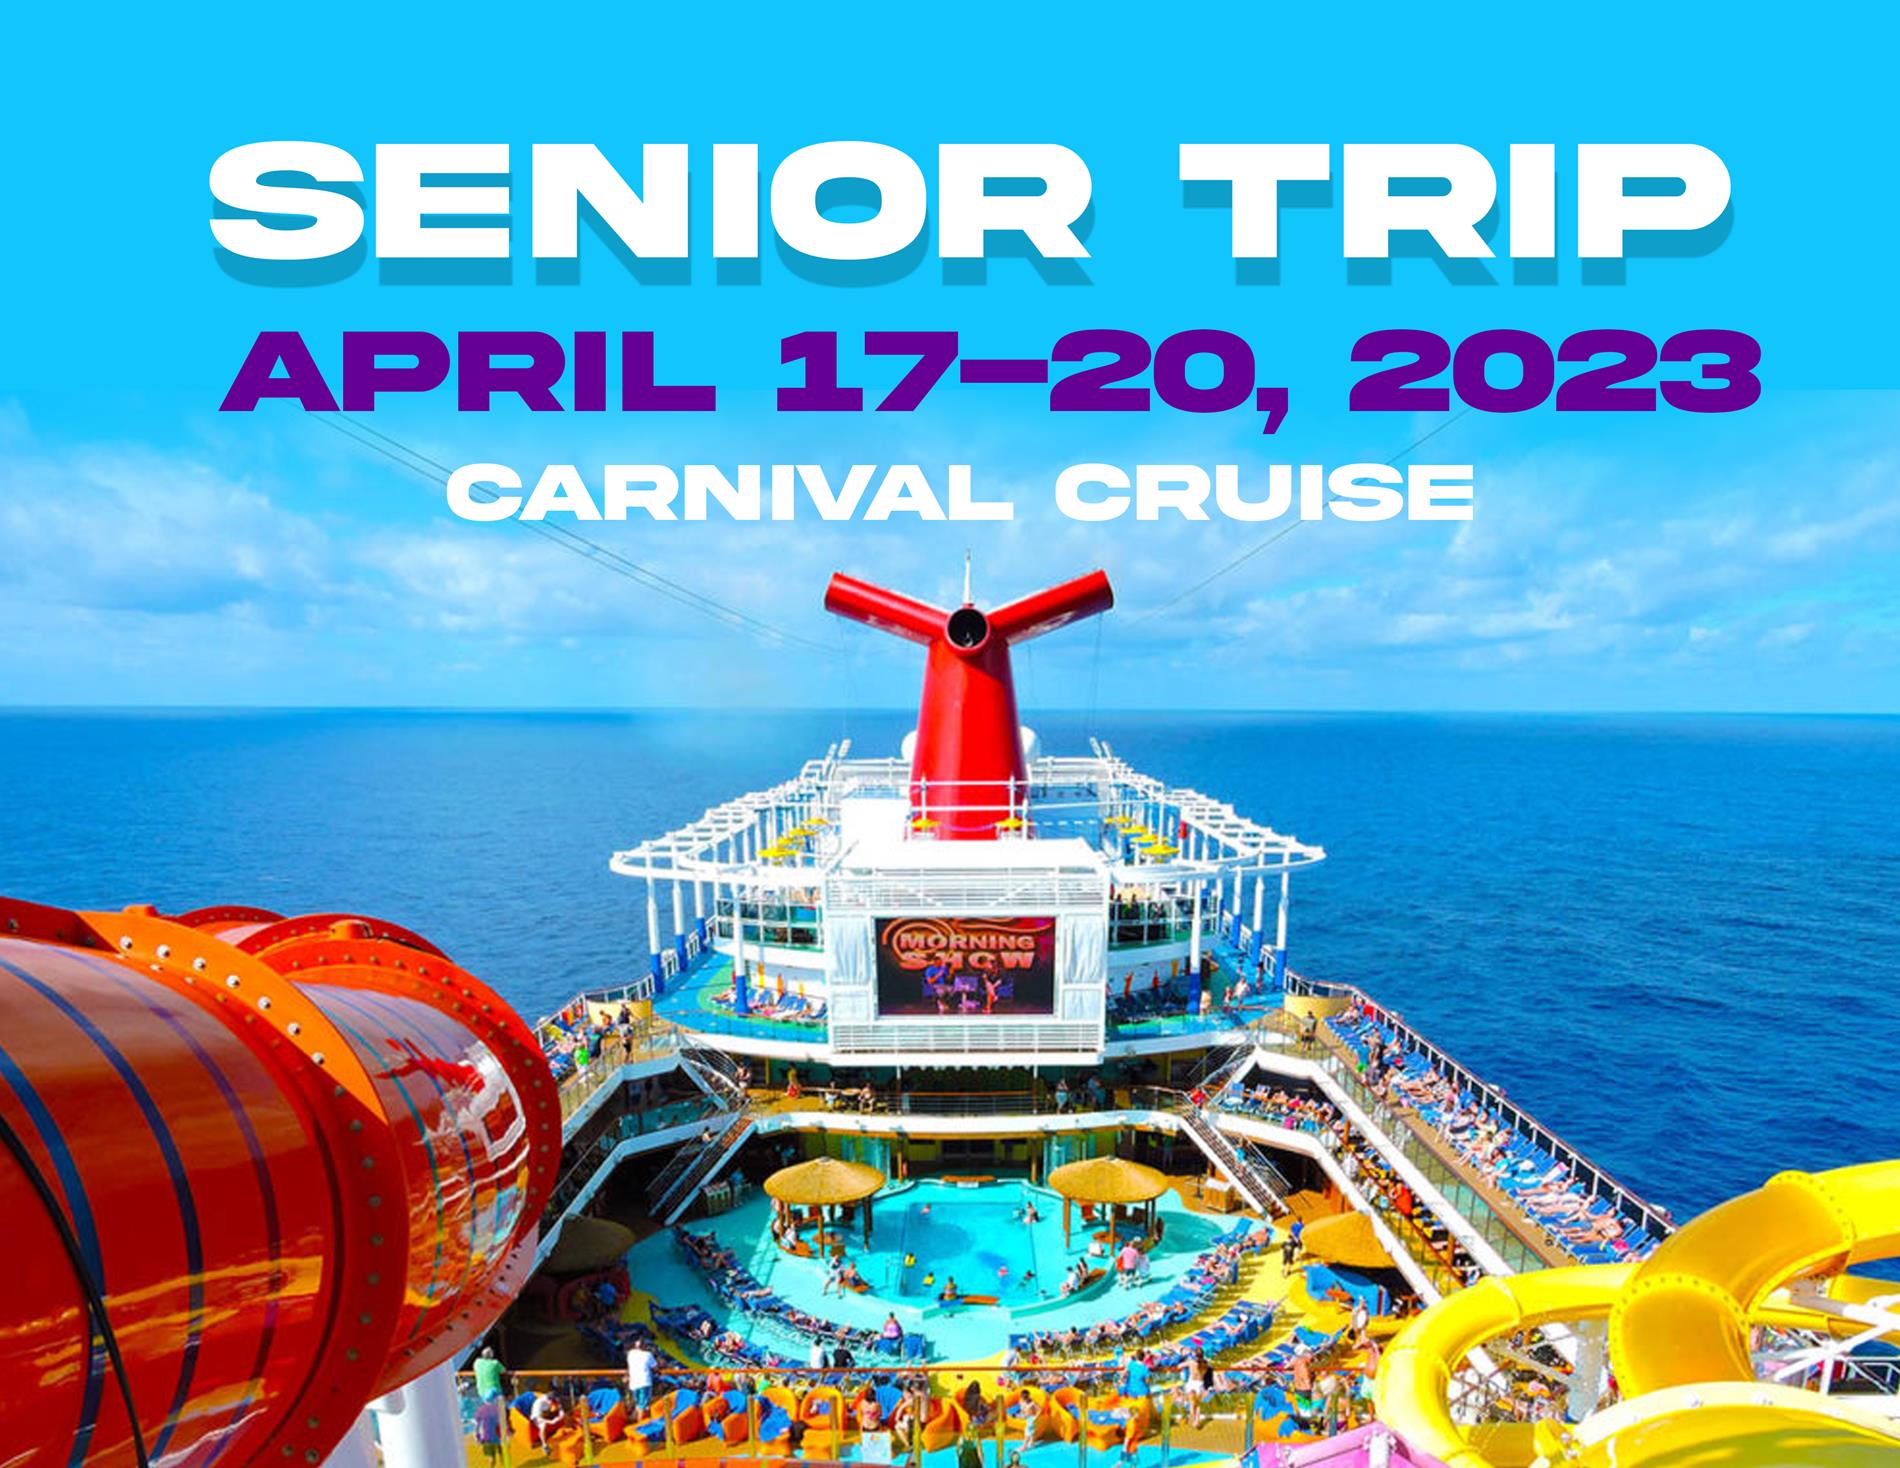 Senior Cruise